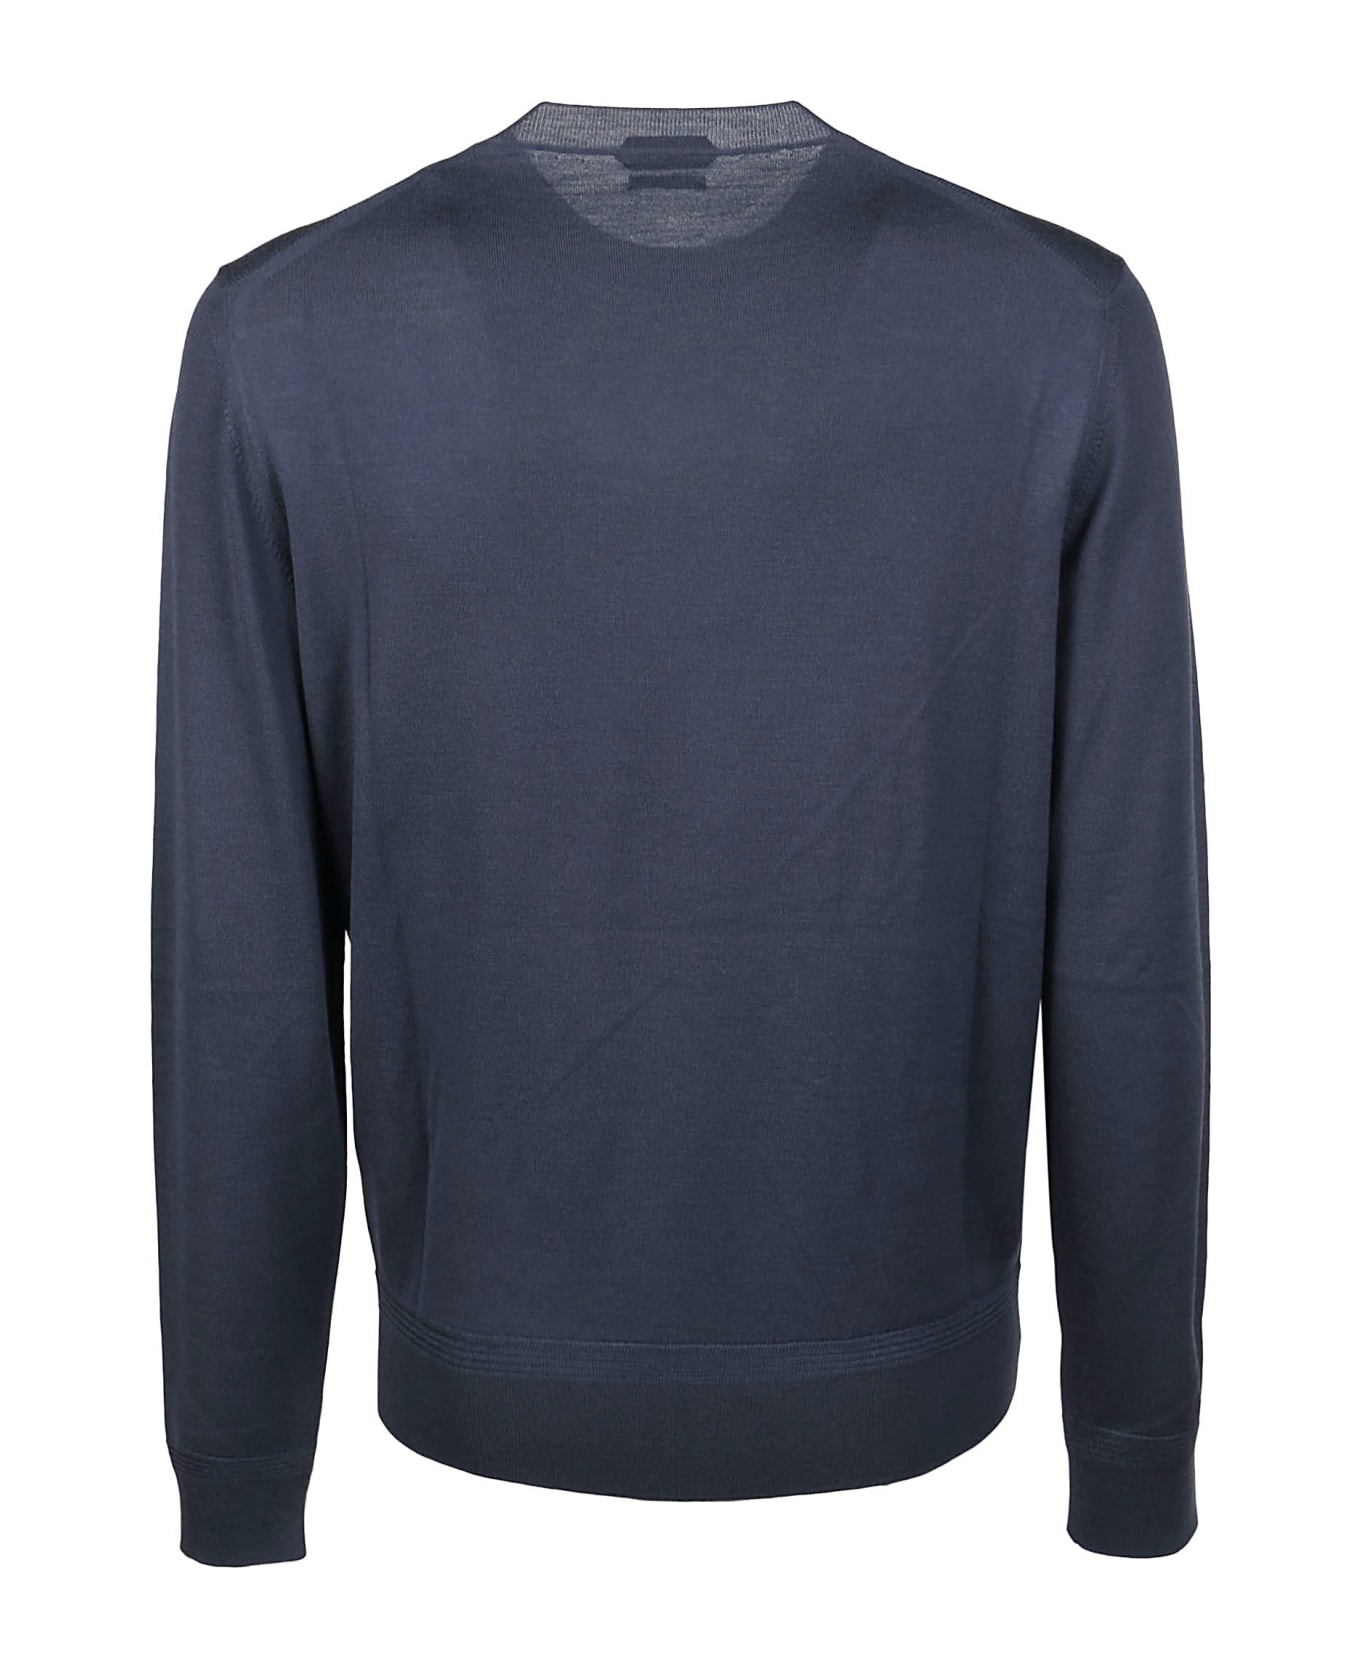 Tom Ford Fine Gauge Merino Sweater - Bright Blue